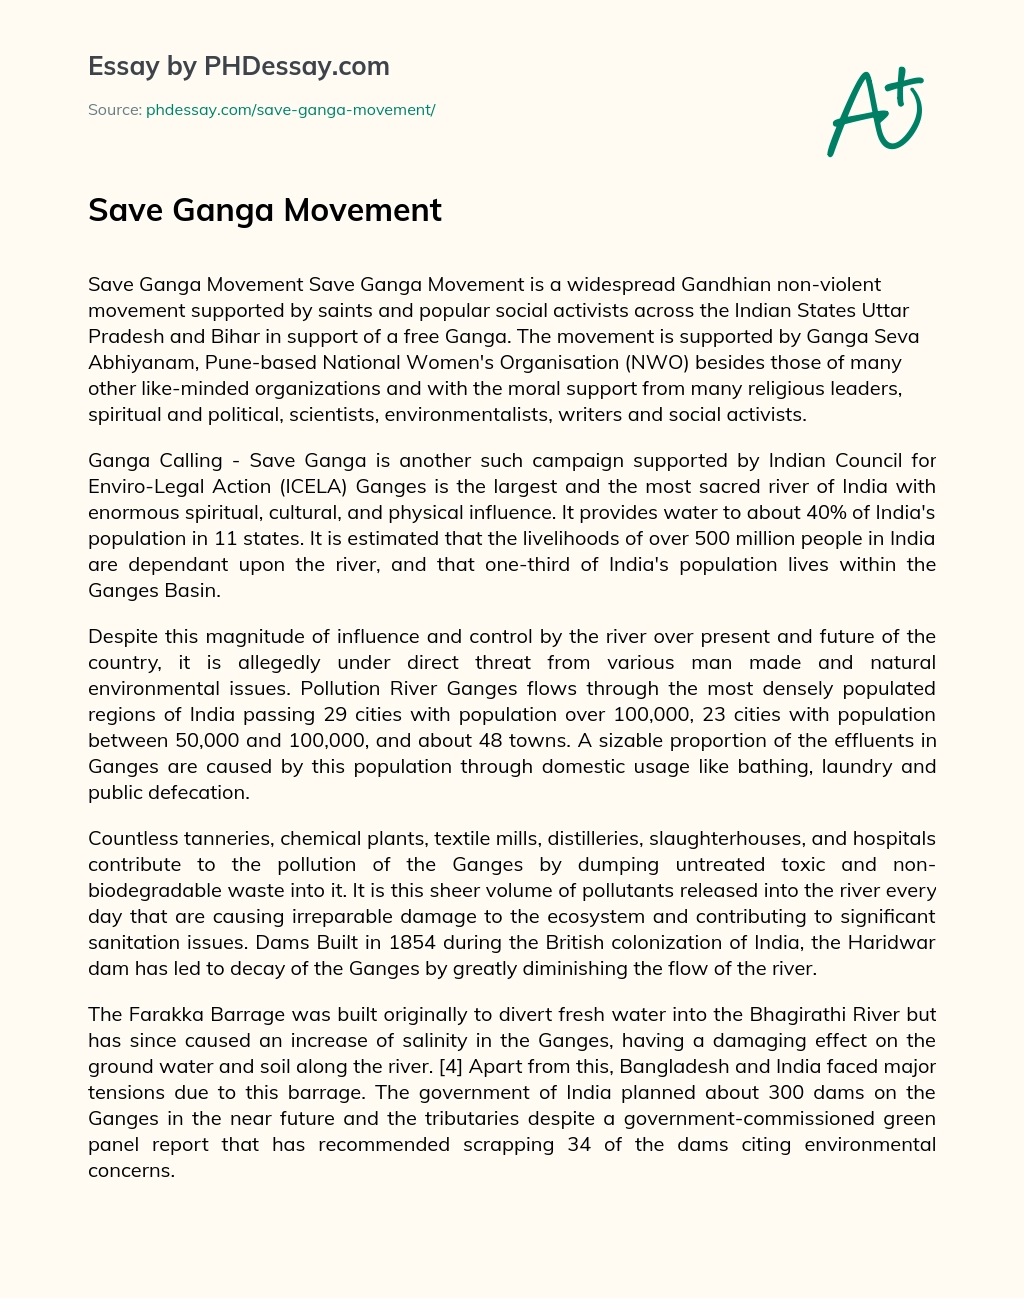 Save Ganga Movement essay